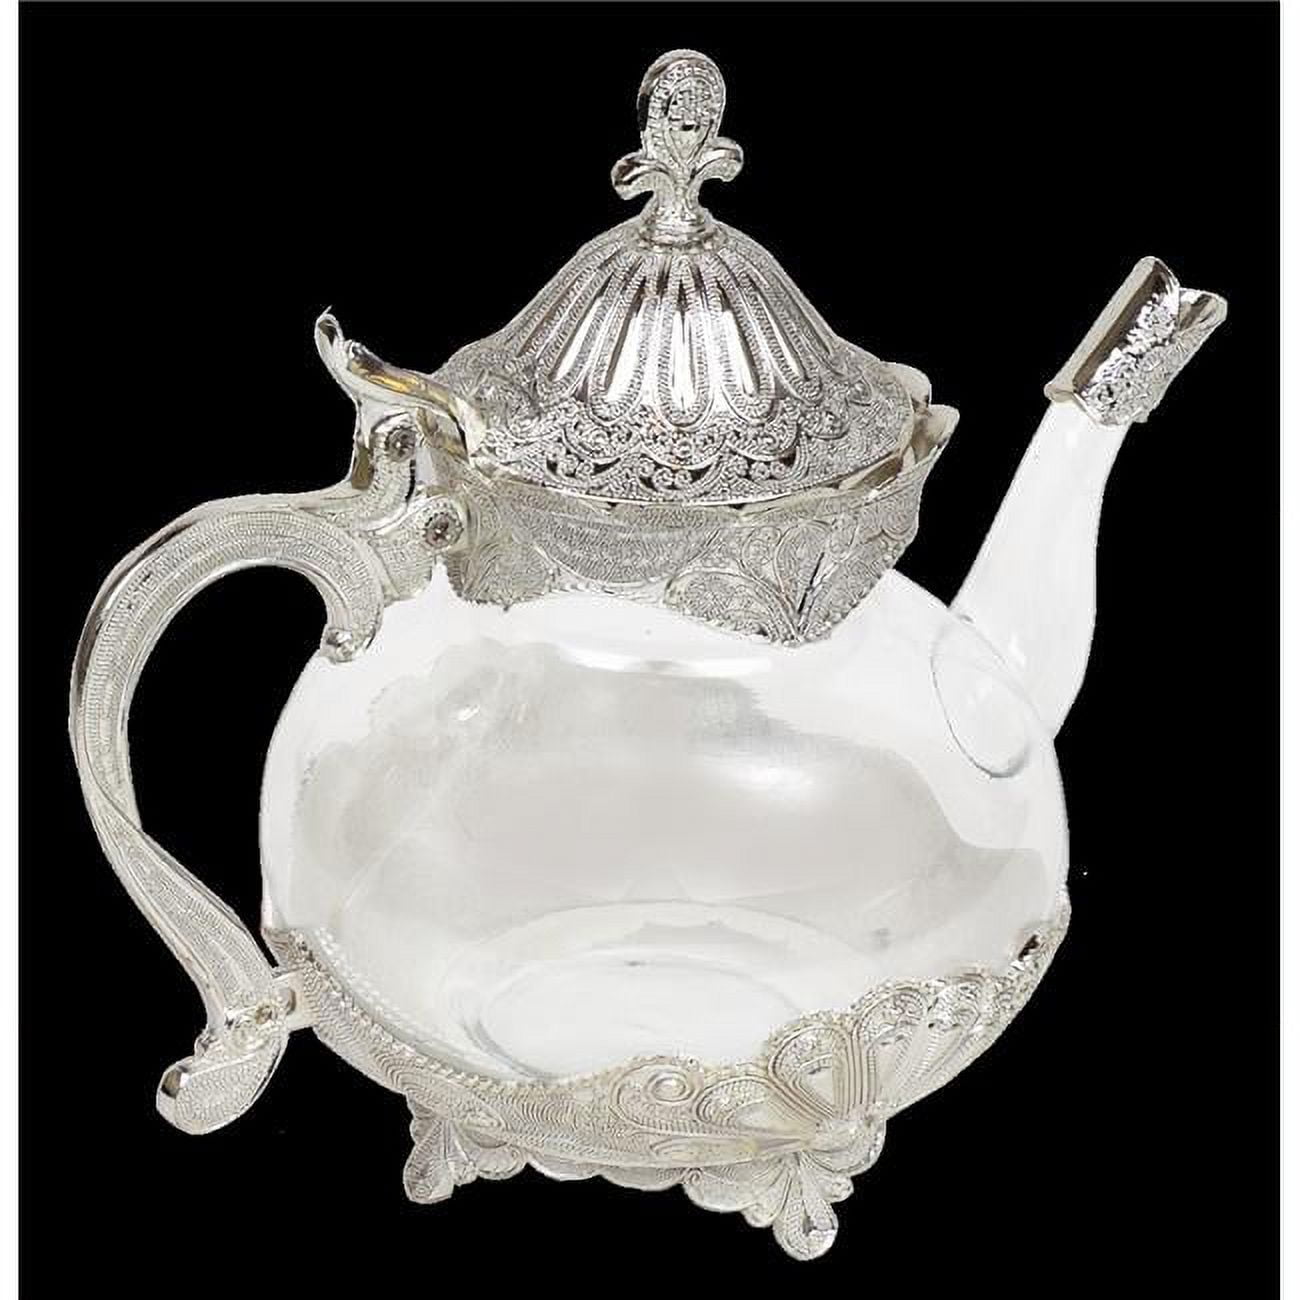 65207 8 In. Silver & Glass Tea Pot